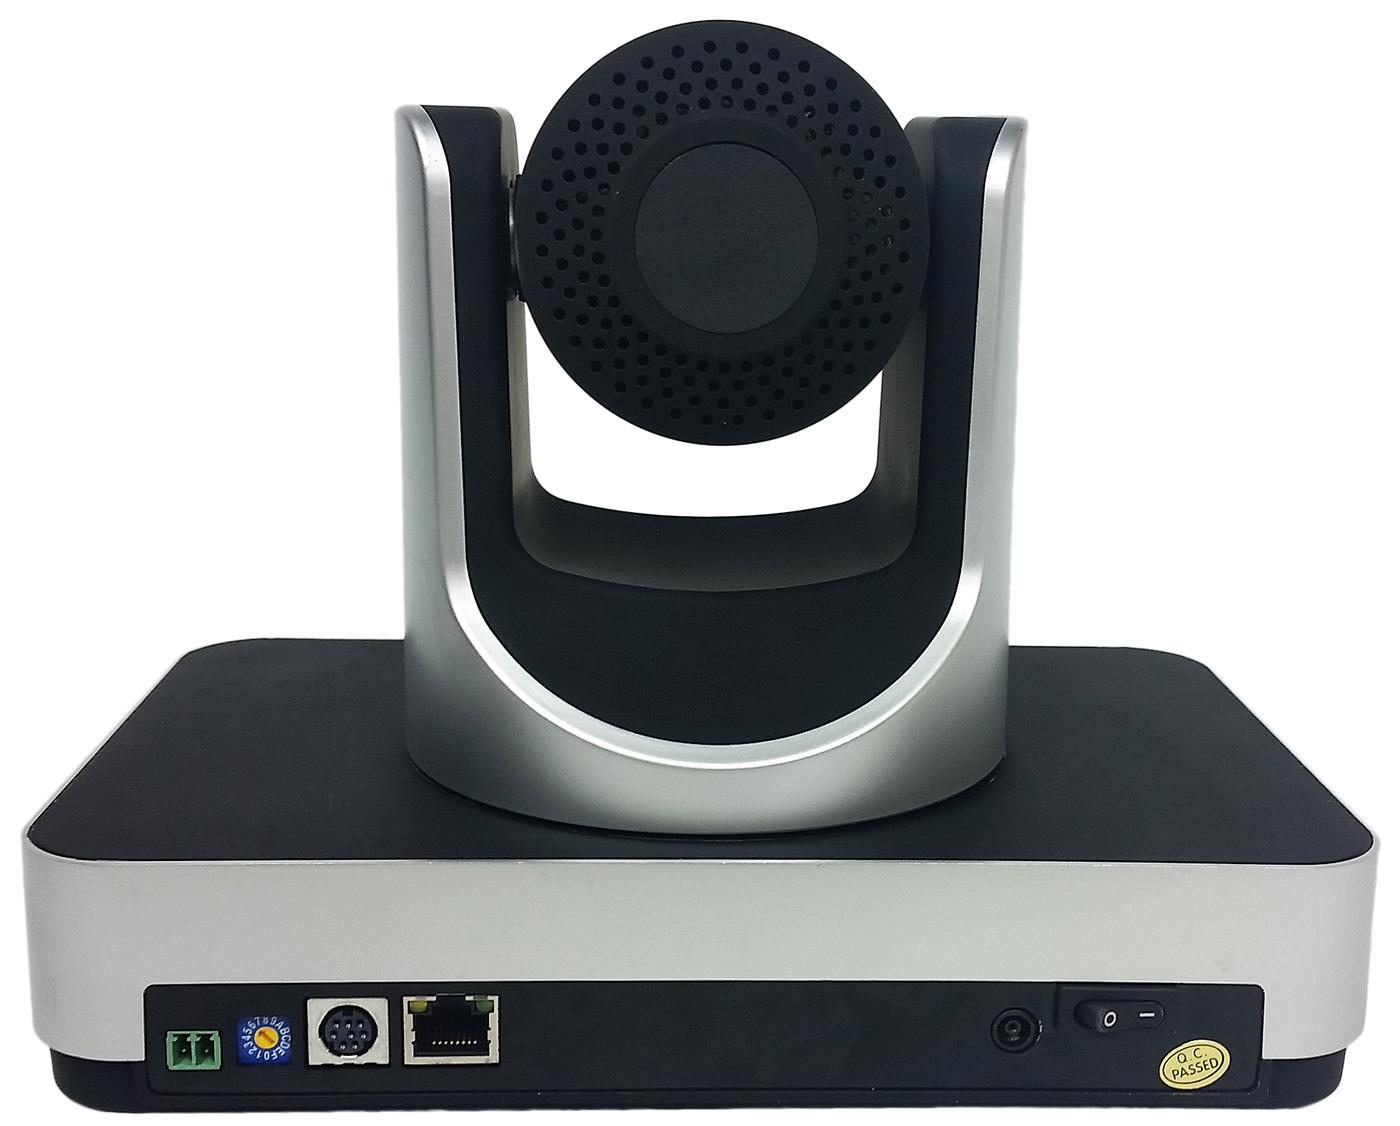 HuddleCam Air  20x Lens, Wireless USB Conferencing Camera, Silver